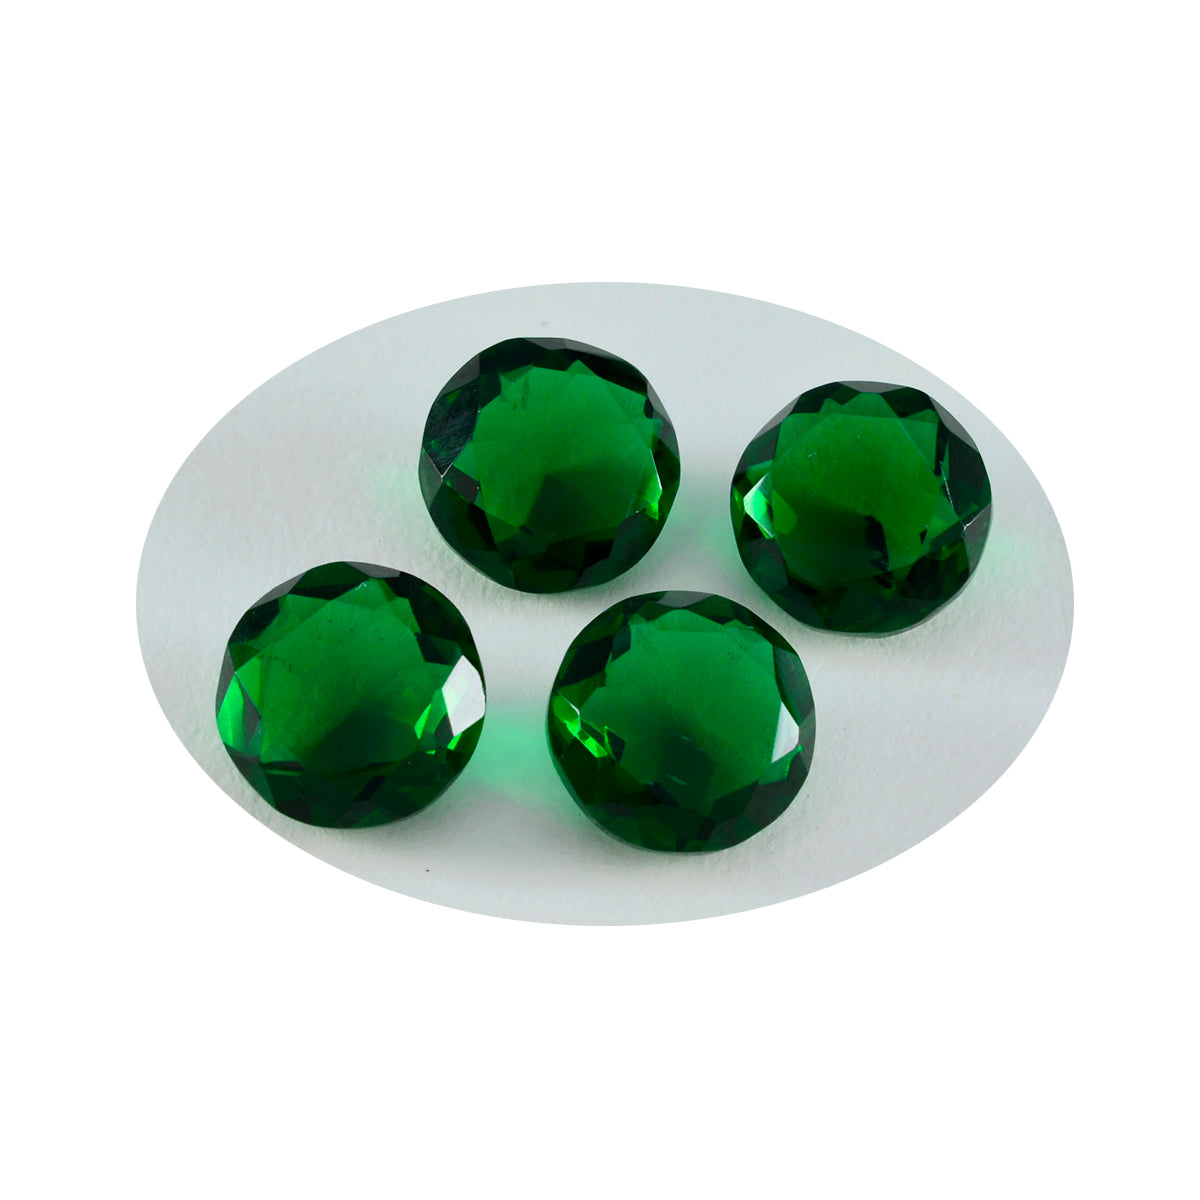 Riyogems 1 Stück grüner Smaragd, CZ, facettiert, 11 x 11 mm, runde Form, A1-Qualität, loser Edelstein